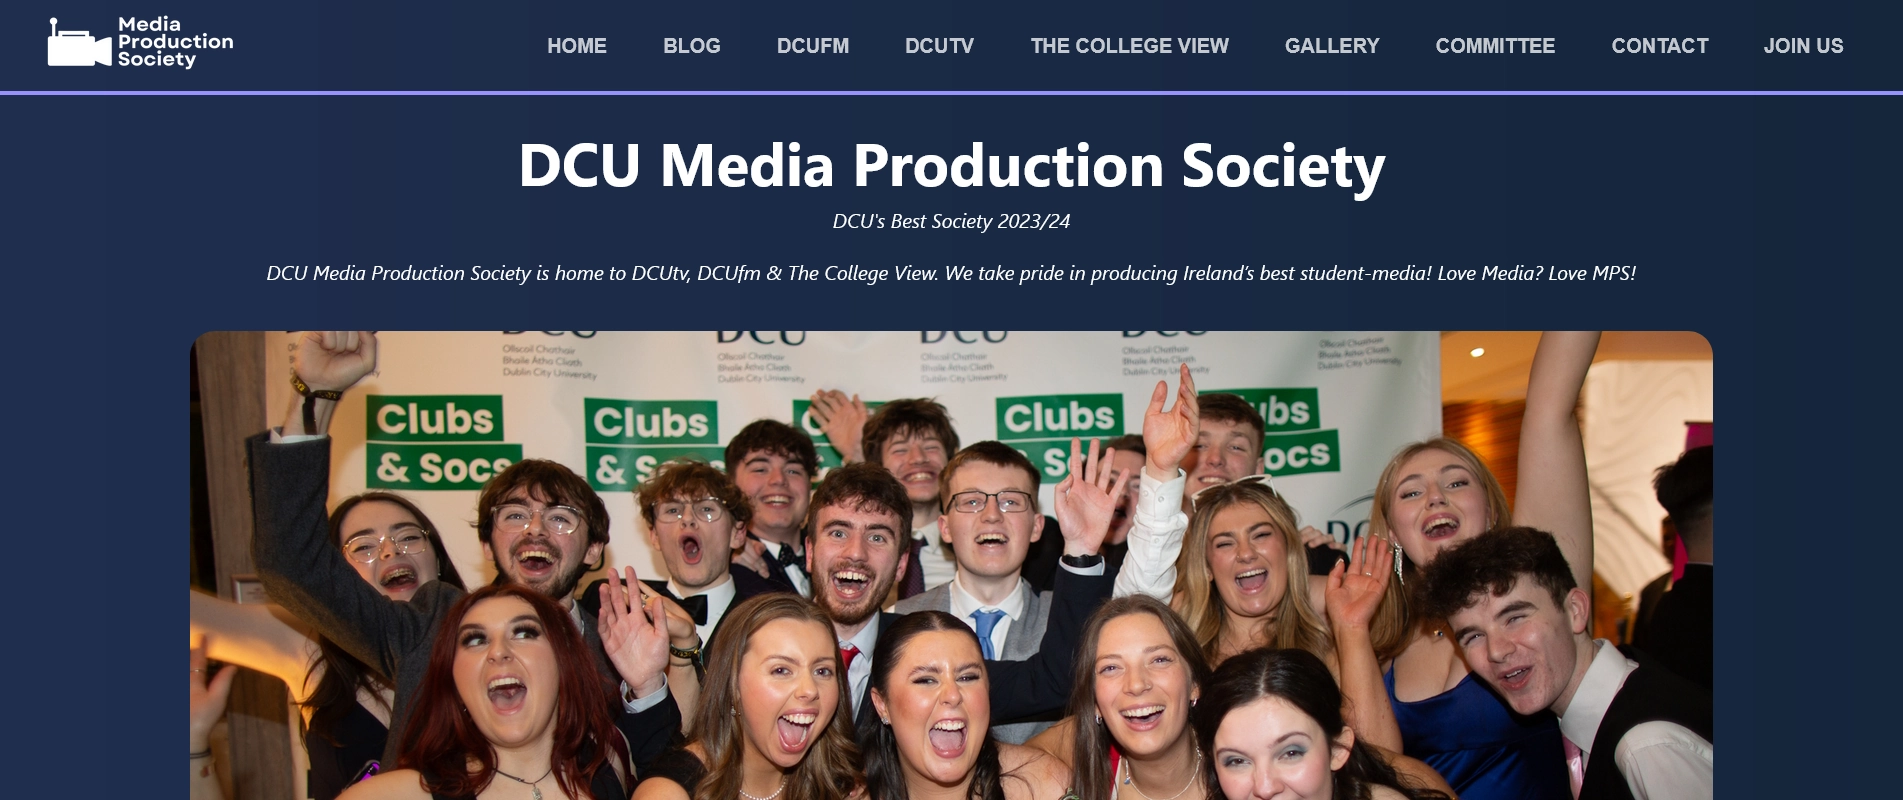 DCU Media Production Society Website